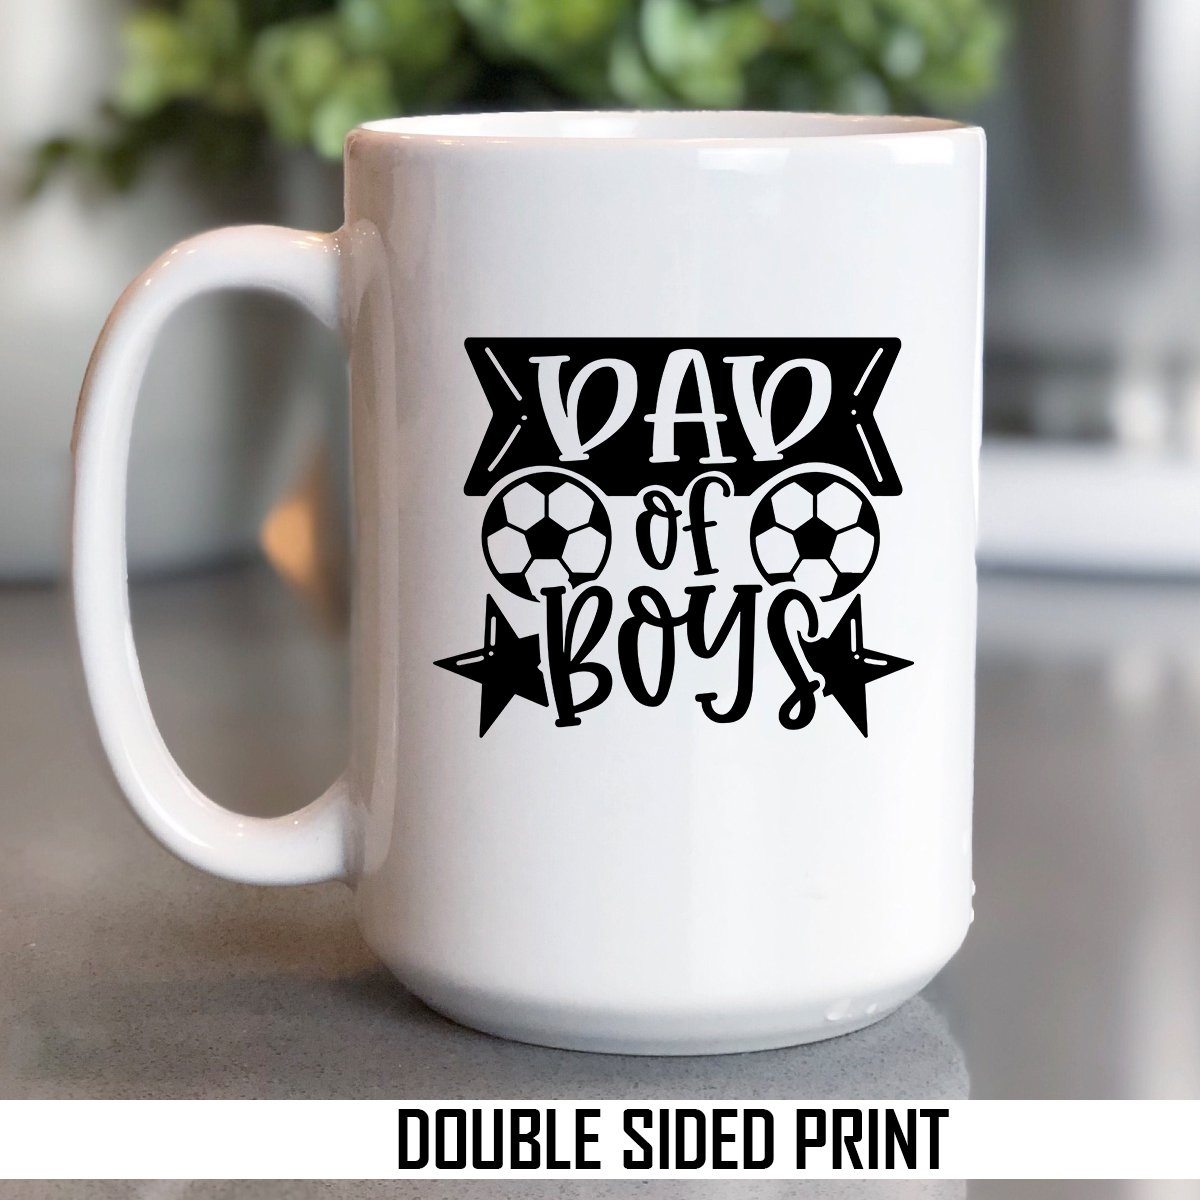 Dad of Boys Double Sided Printed Mug